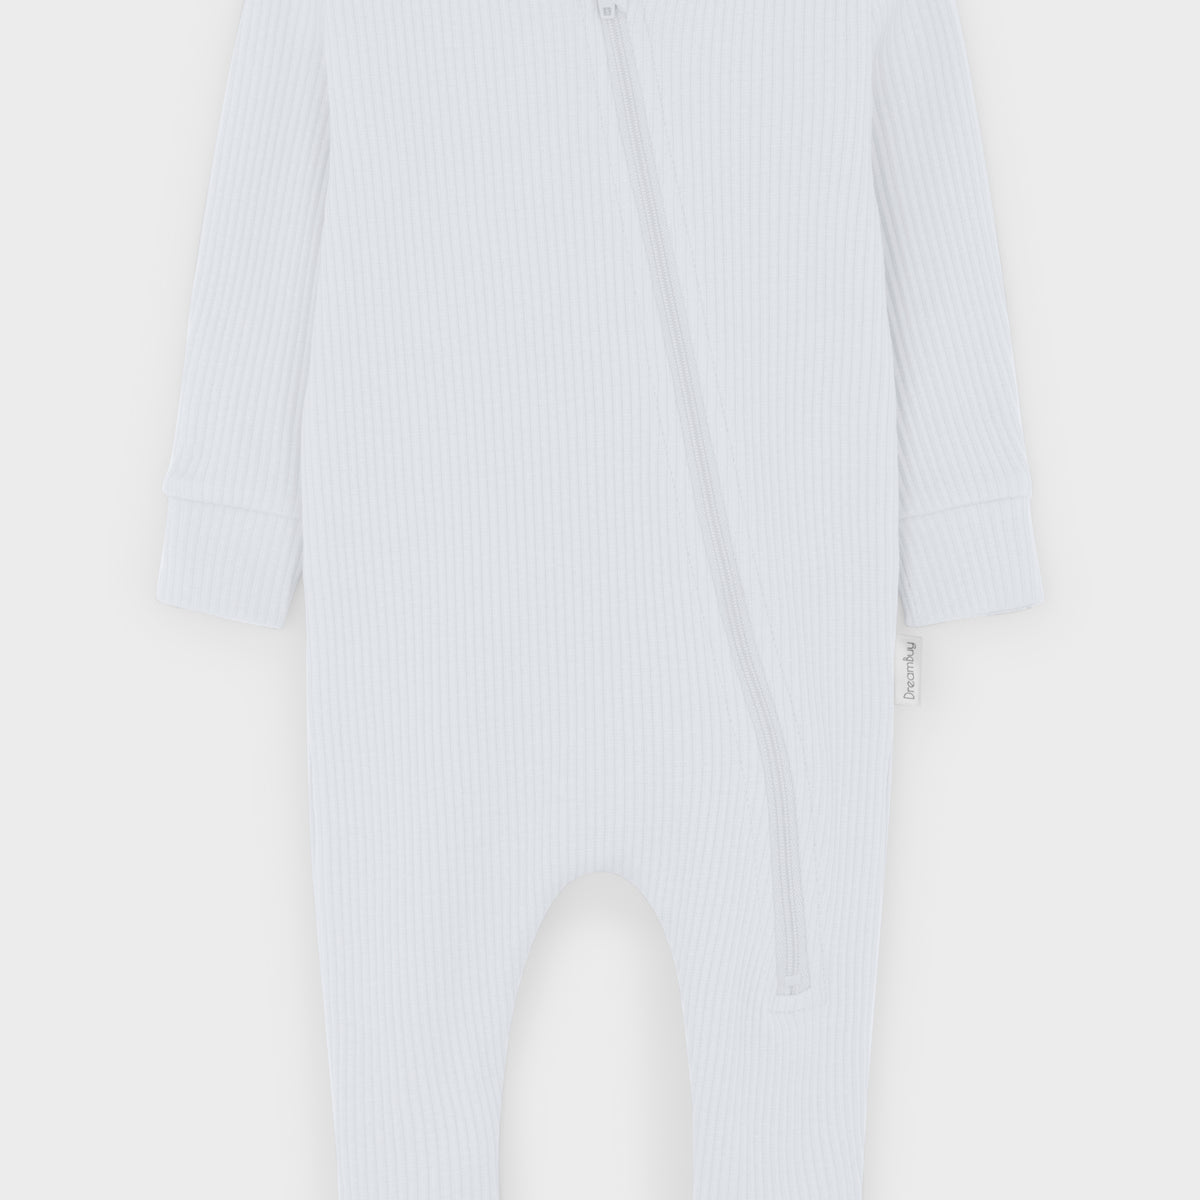 White Zip Sleepsuit DreamBuy